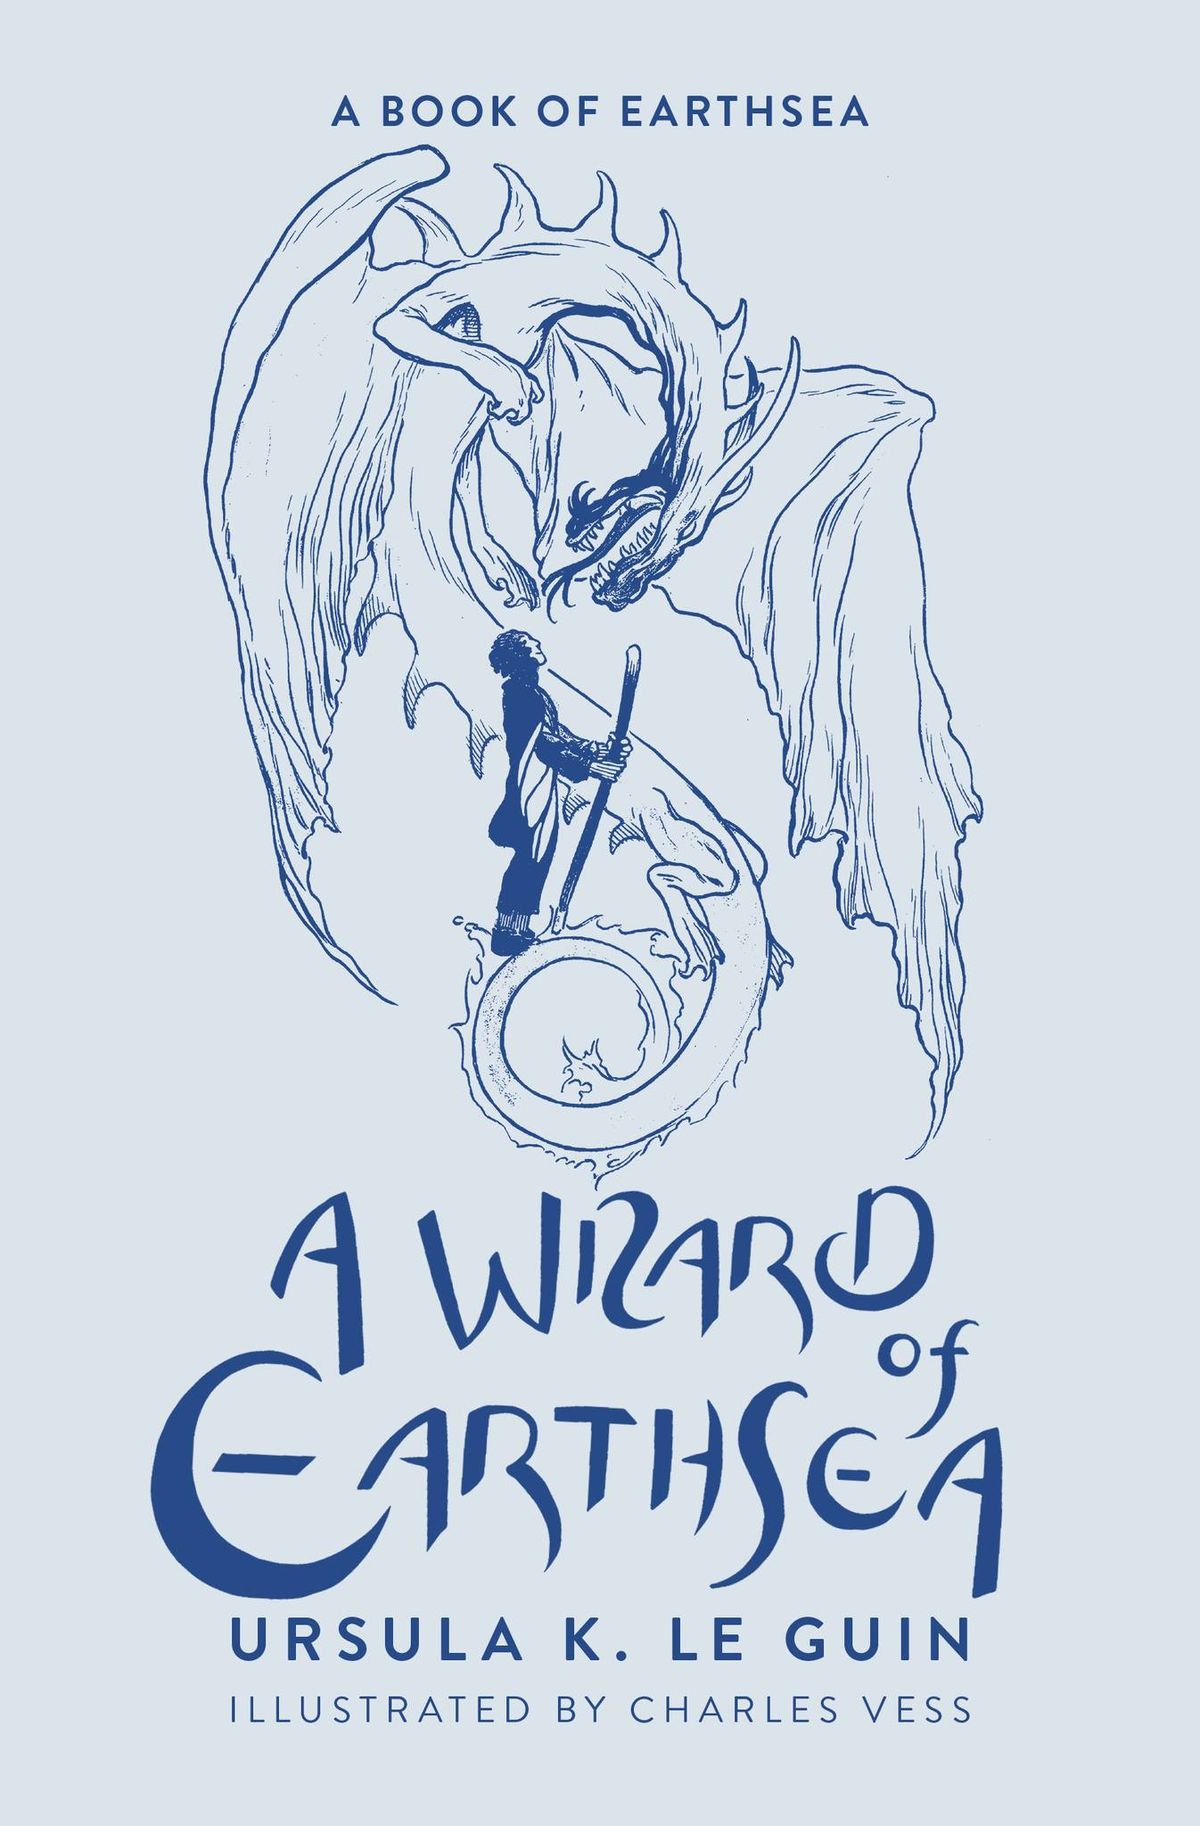 Bookclub - A Wizard of Earthsea, by Ursula K. Le Guin